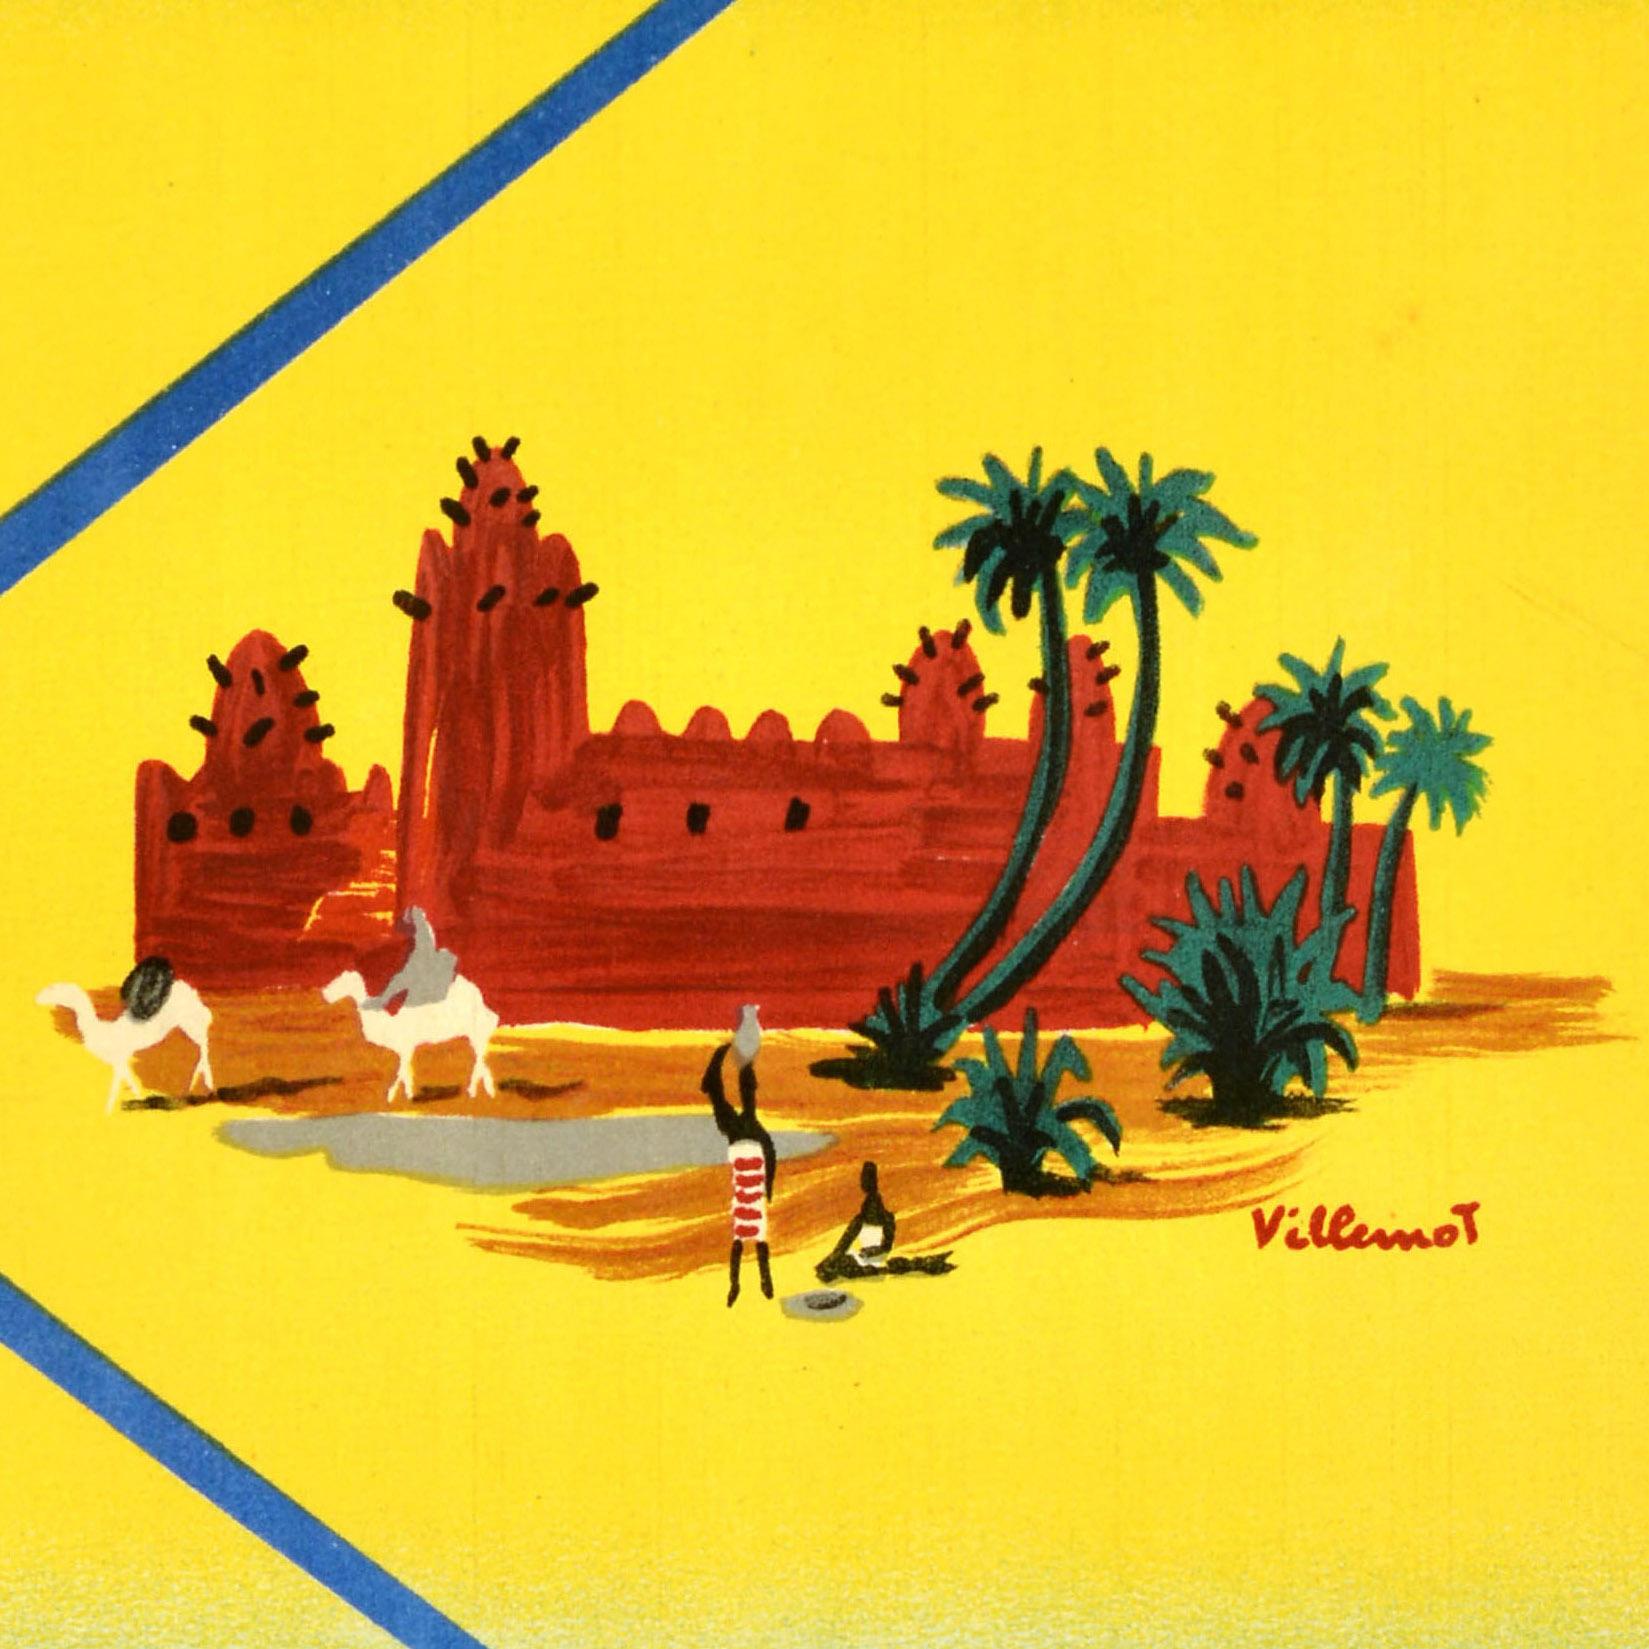 Original Vintage Travel Poster TAI Afrique Noire Sub Sahara Africa Villemot Art - Print by Bernard Villemot